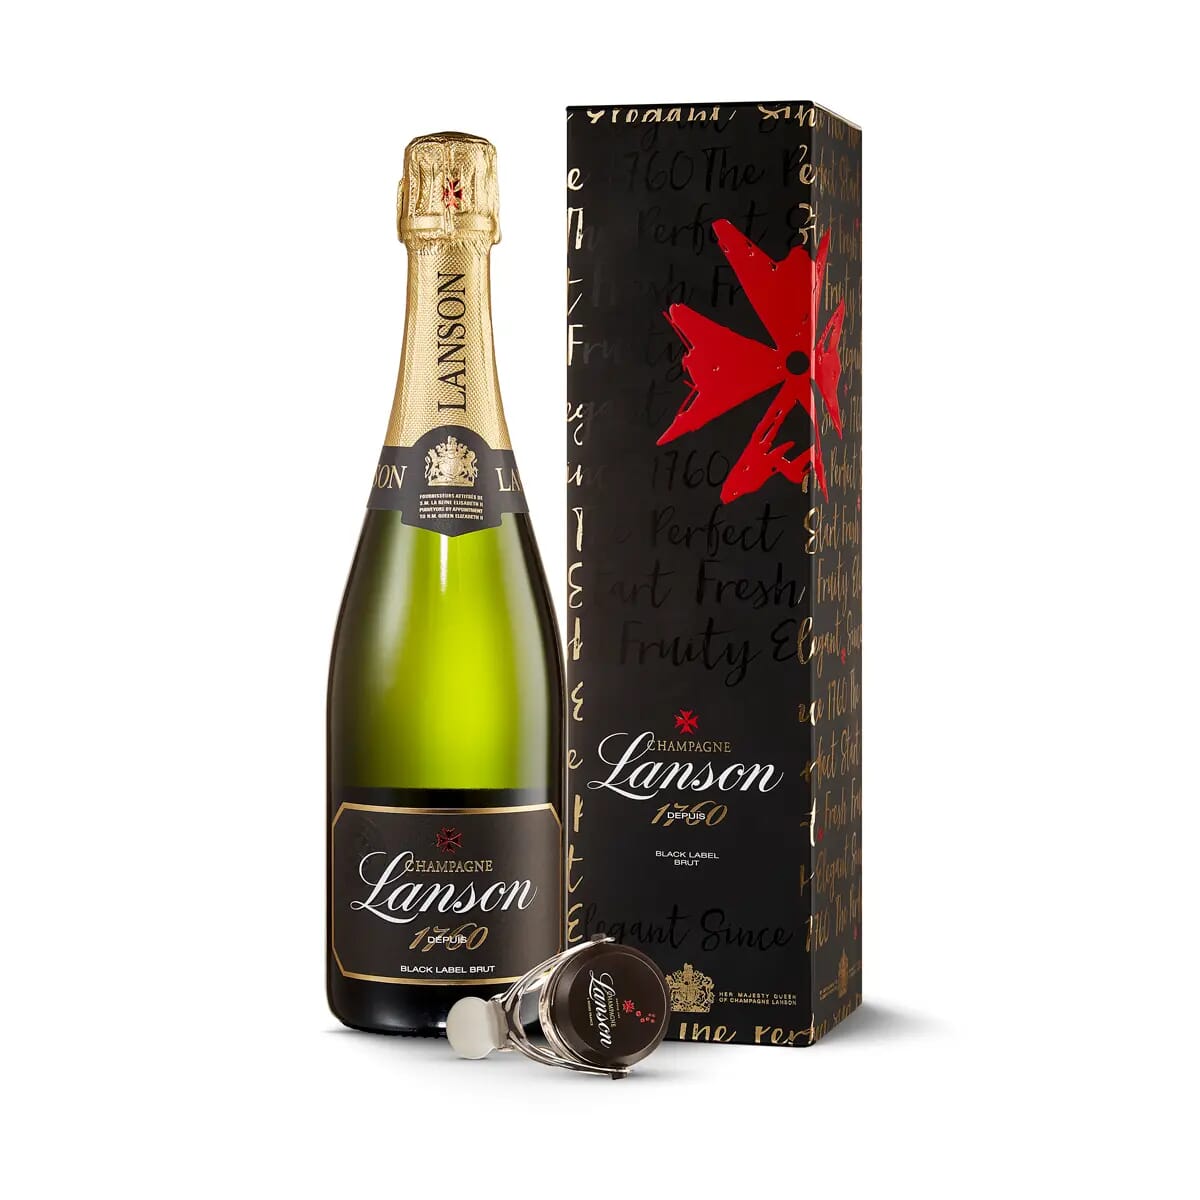 Lanson black label champagne bottle and box e commerce product photography london